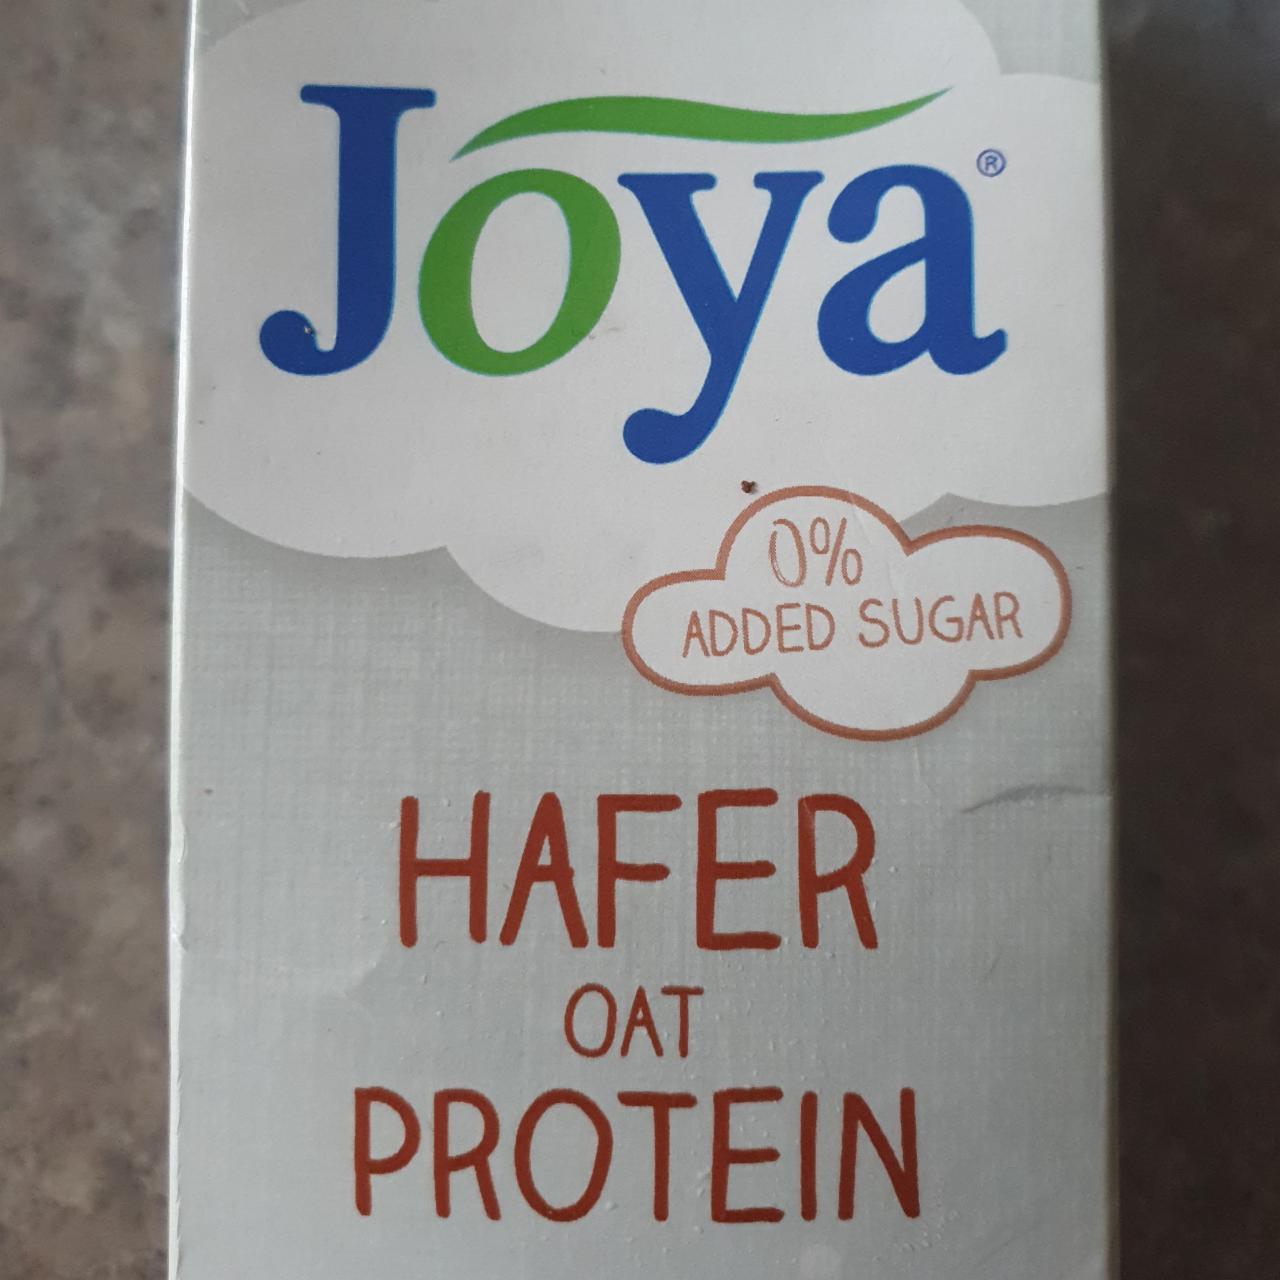 Фото - Молоко соєво-вівсяне Hafer Oat Protein Joya